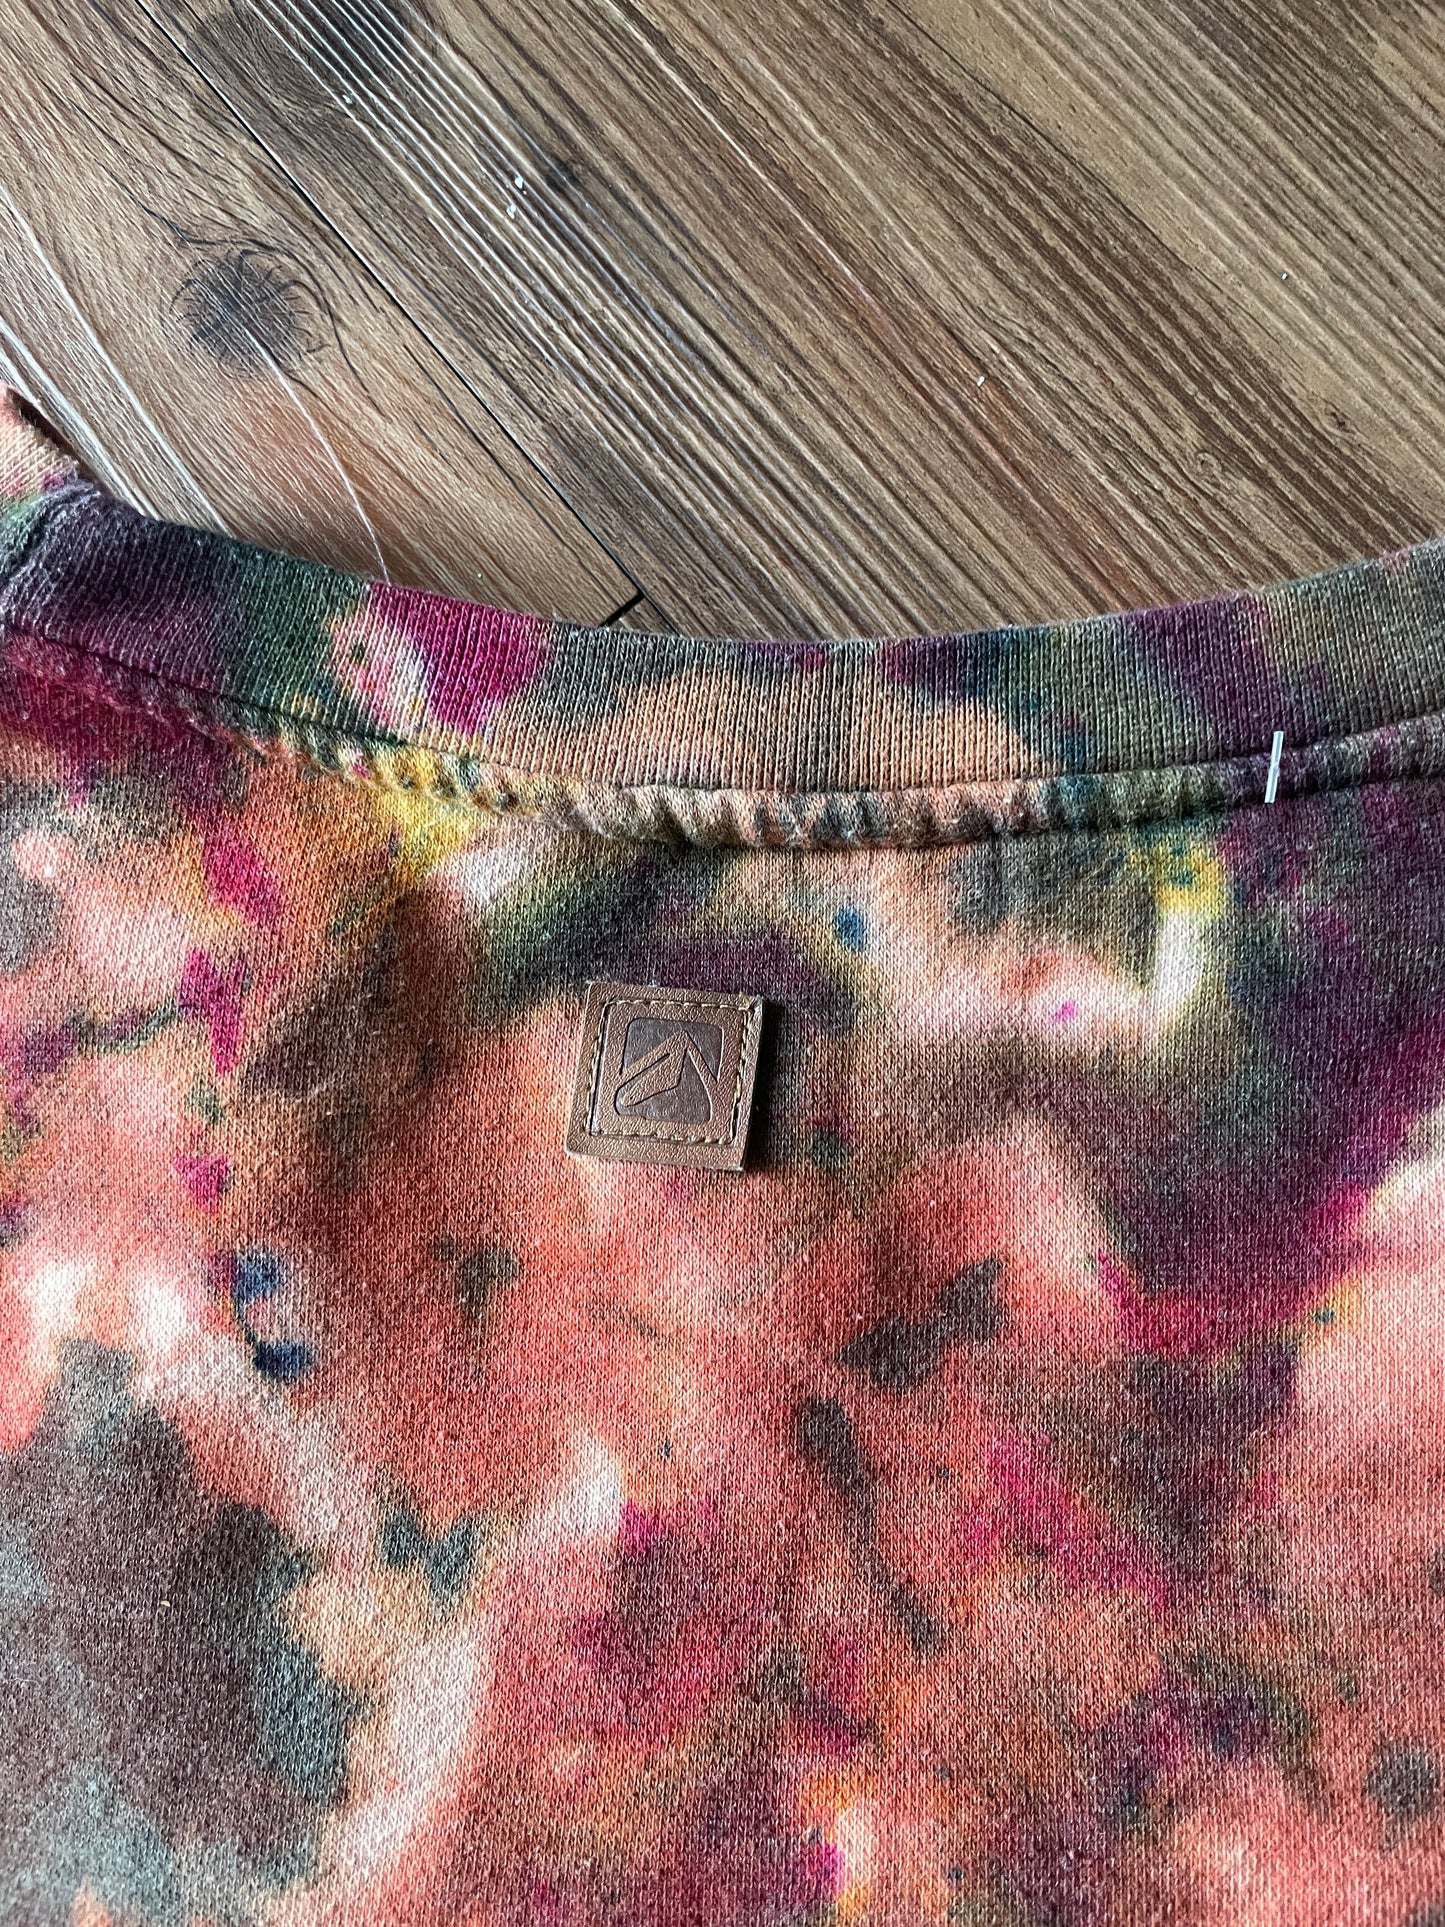 2XL Men’s Park City Utah Green and Brown Crumpled Handmade Tie Dye Sweatshirt